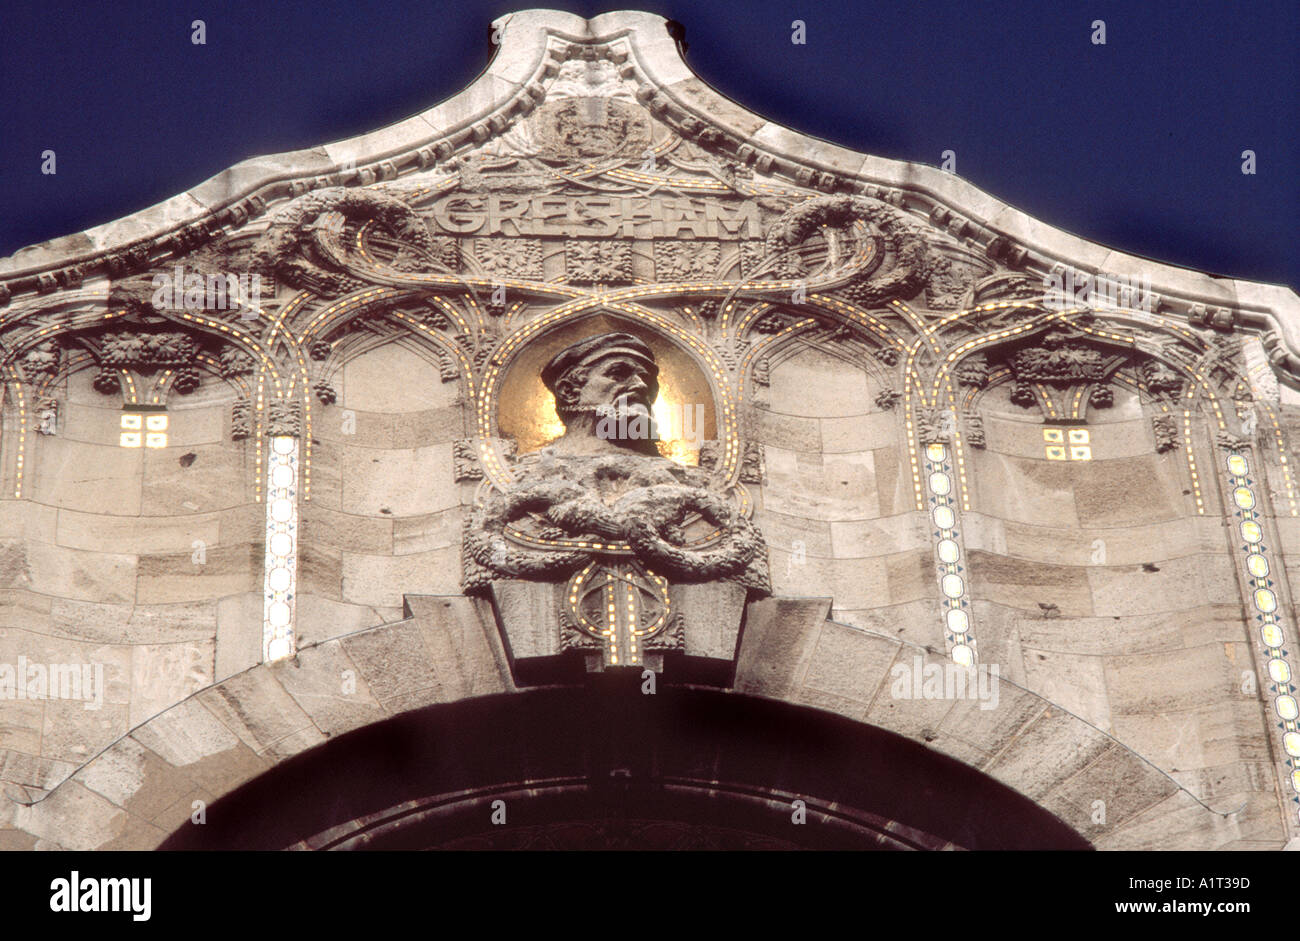 Budapest Hungary 'Gresham Palace Hotel' Facade Art Nouveau Style Architectural  Detail Stone, exterior Stock Photo